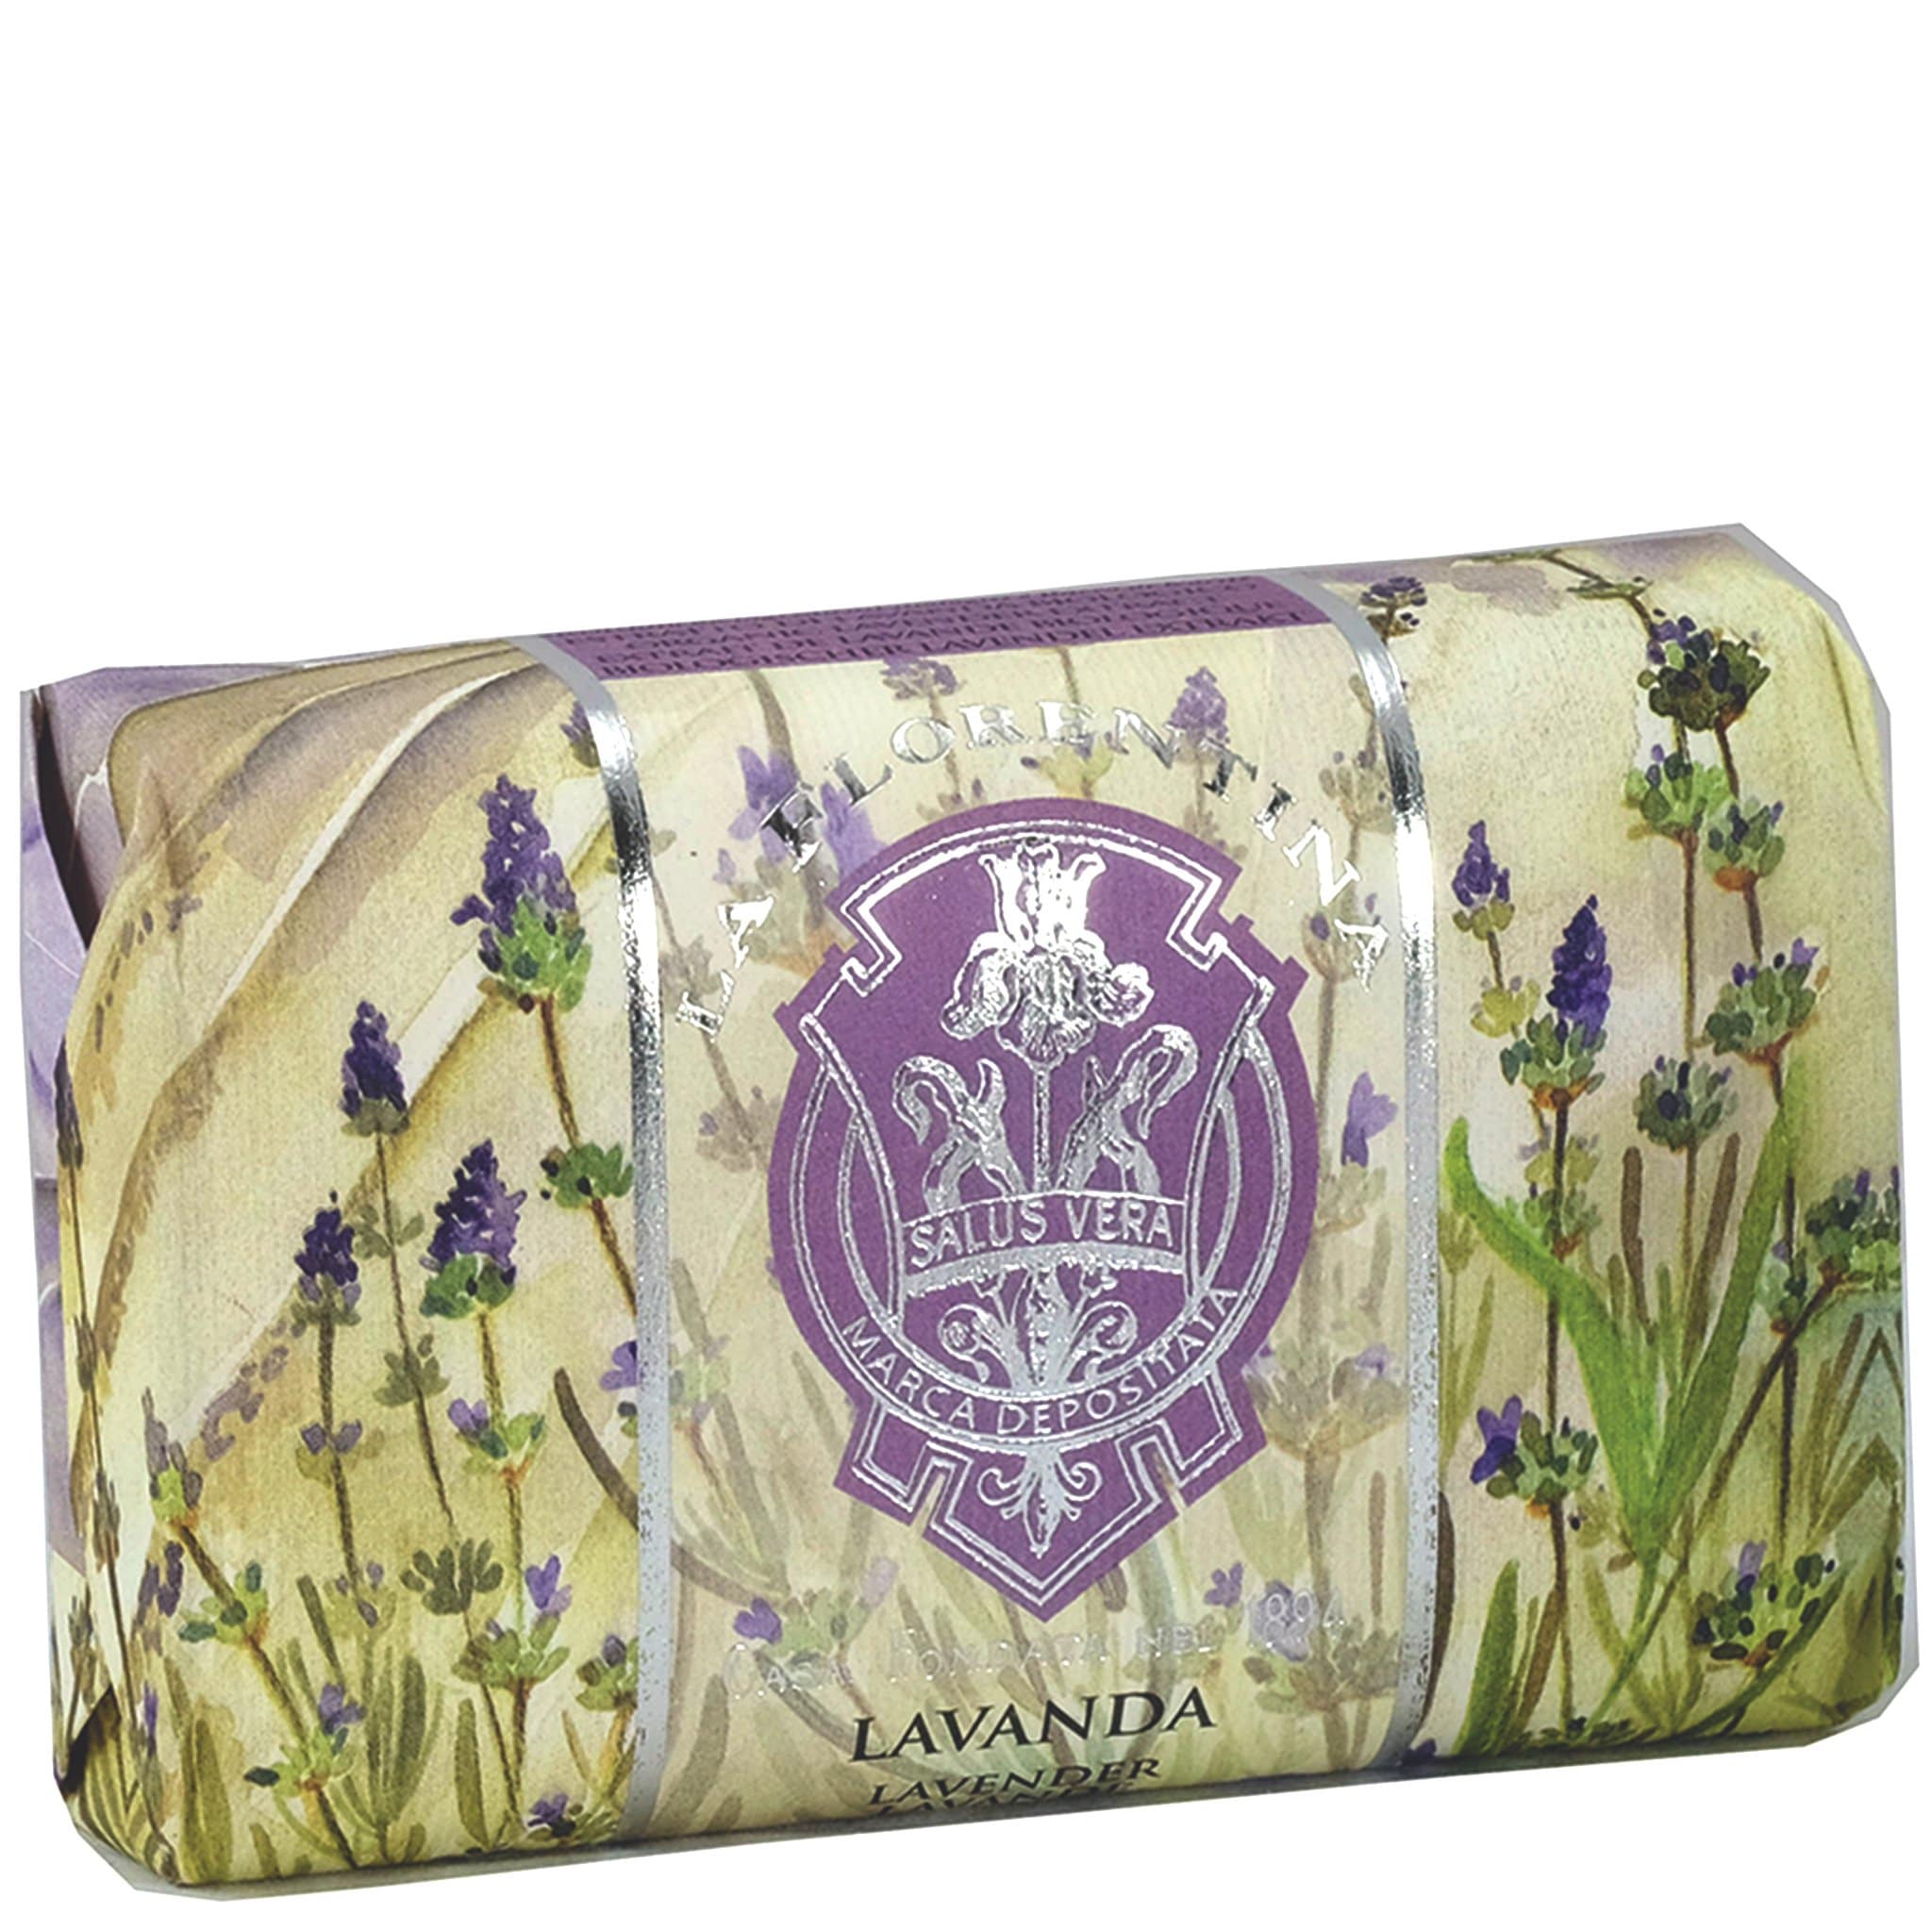 Italian Luxury Group 200g Bar Soap La Florentina Lavender Bar soap 200g Brand